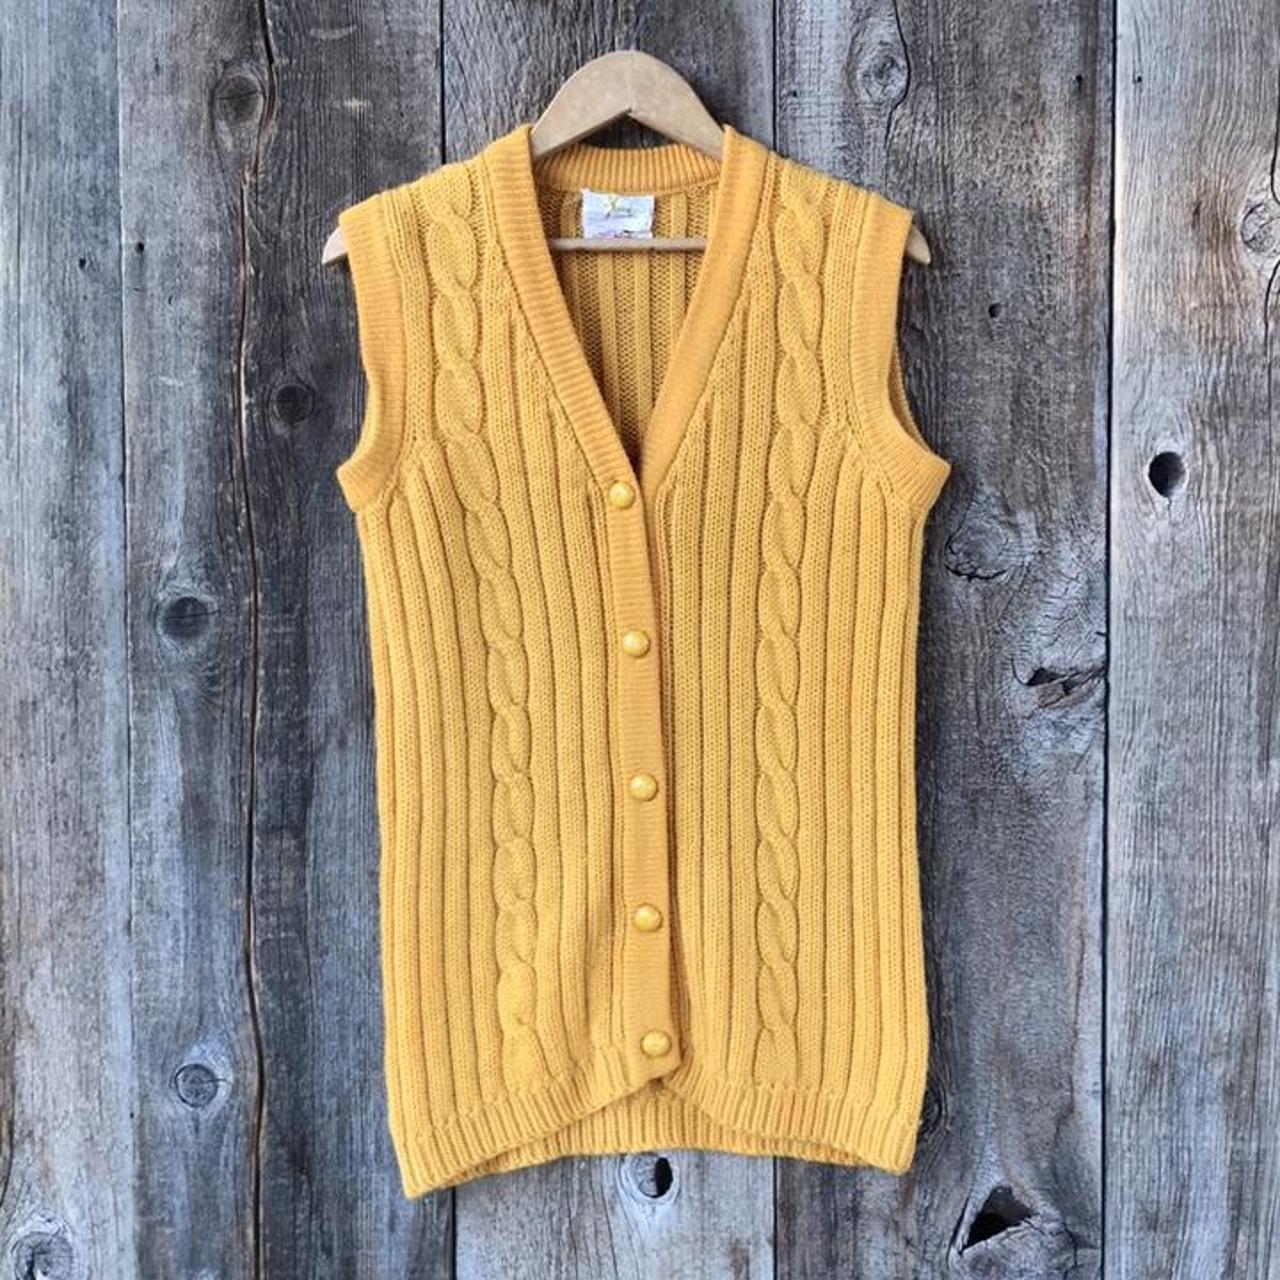 Vintage 1960s era 100% wool sweater vest by Tami. No... - Depop